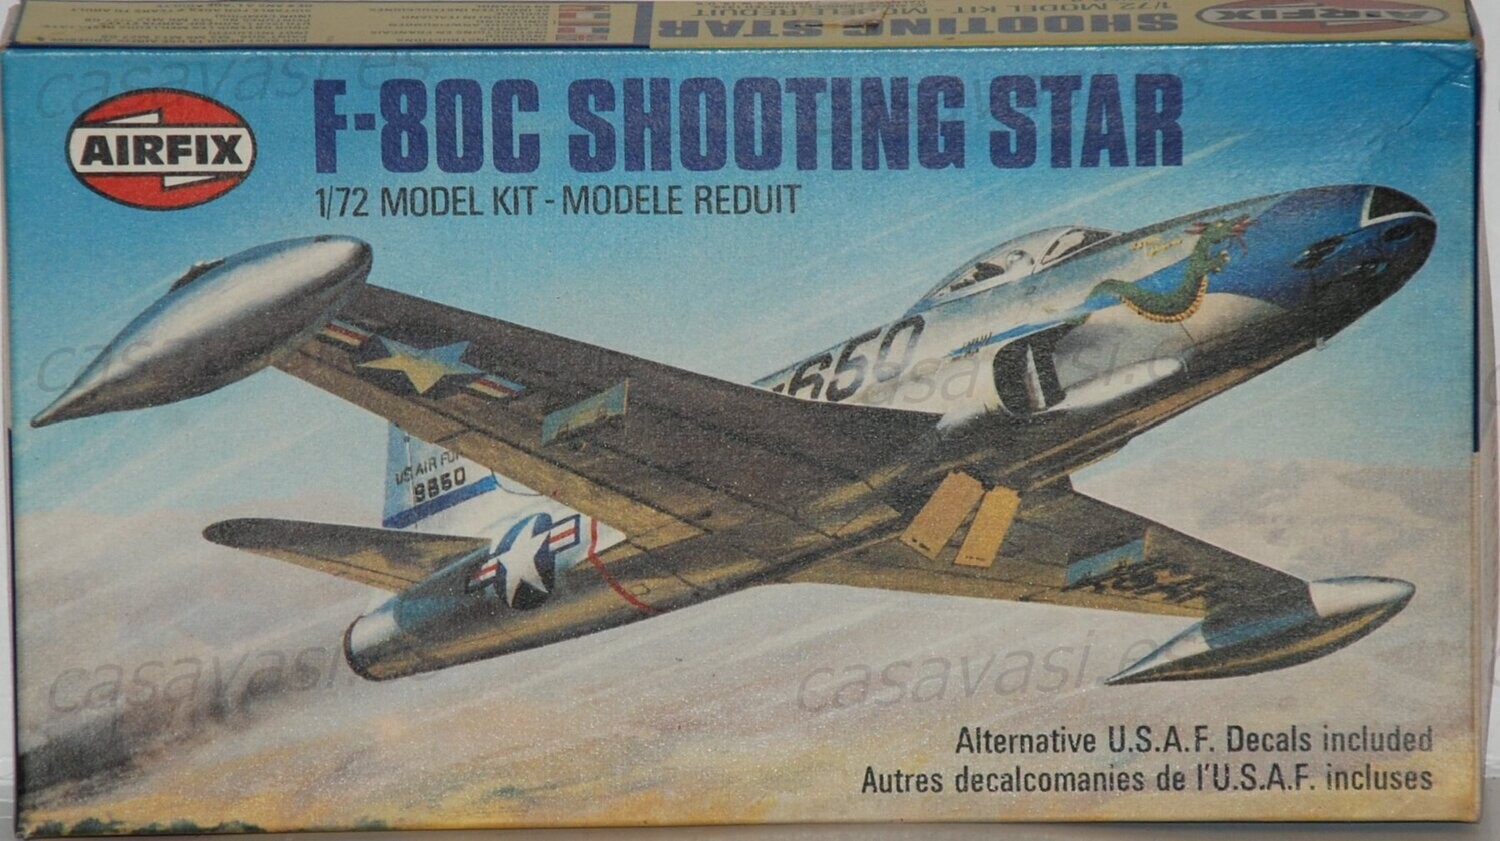 Airfix - 1979 - s2-02043-3 - 1/72 - F-80C Shooting Star
Box Size 21 x 11.5 cm.